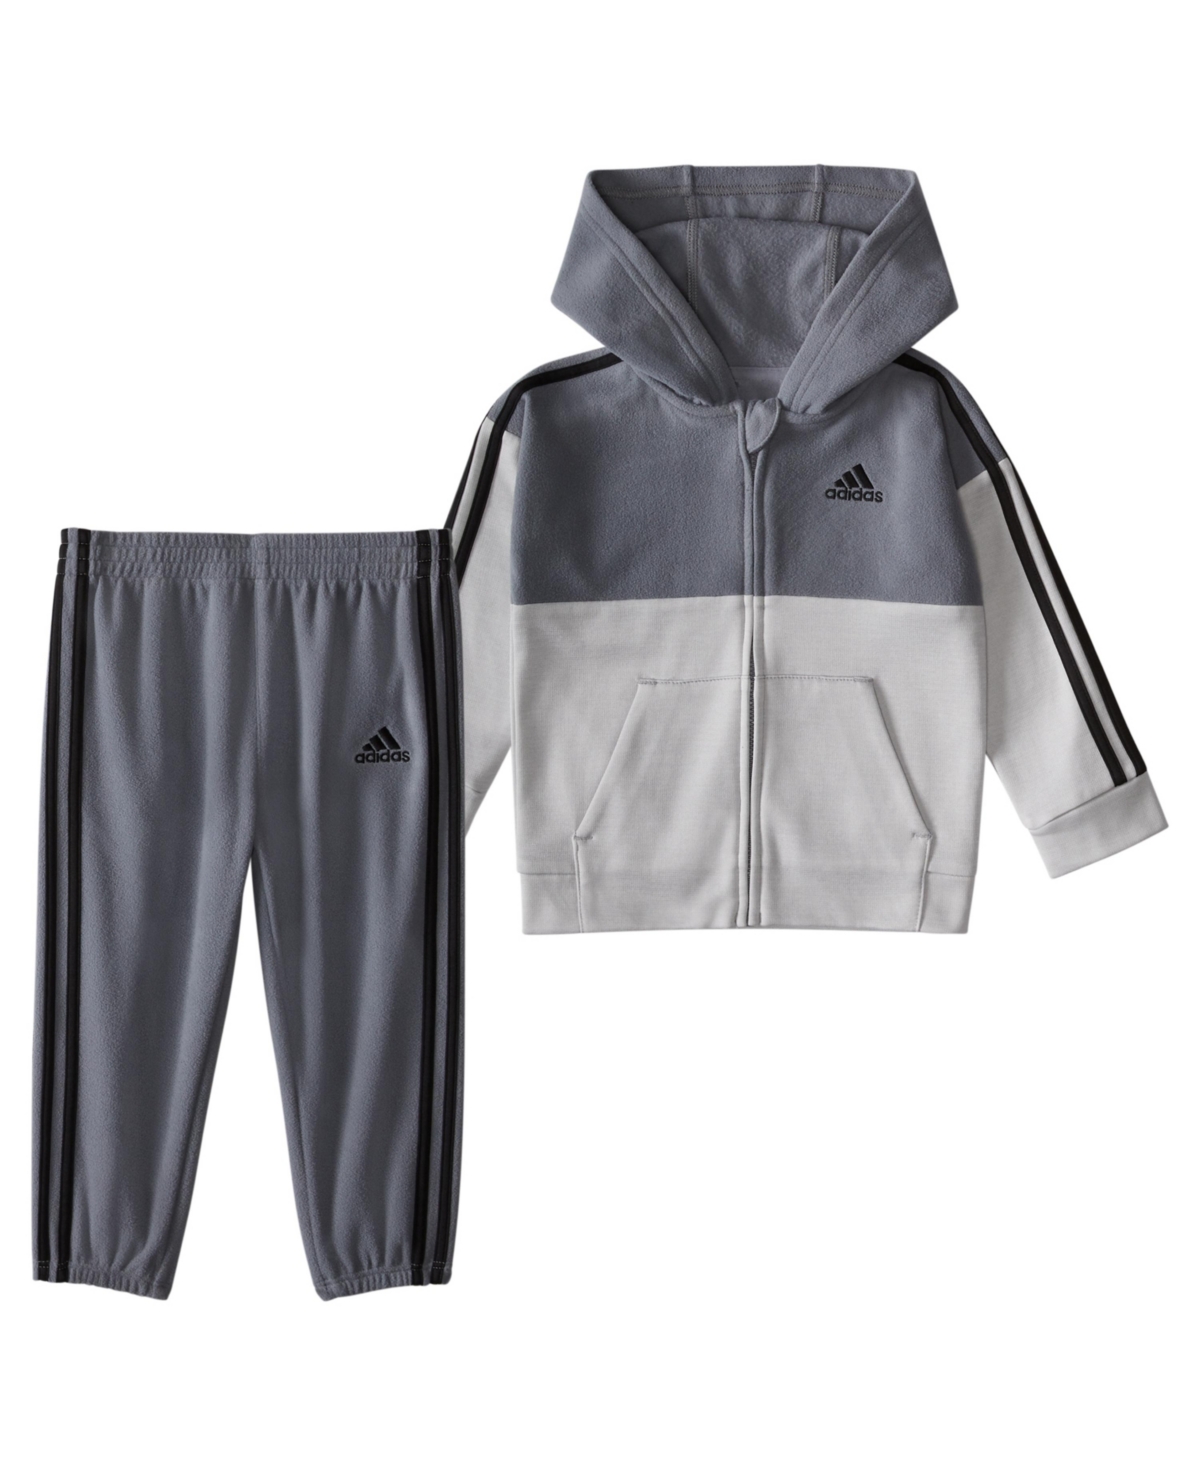 Adidas Originals Baby Boys Fleece Hoodie Jacket And Pants, 2 Piece Set In Gray